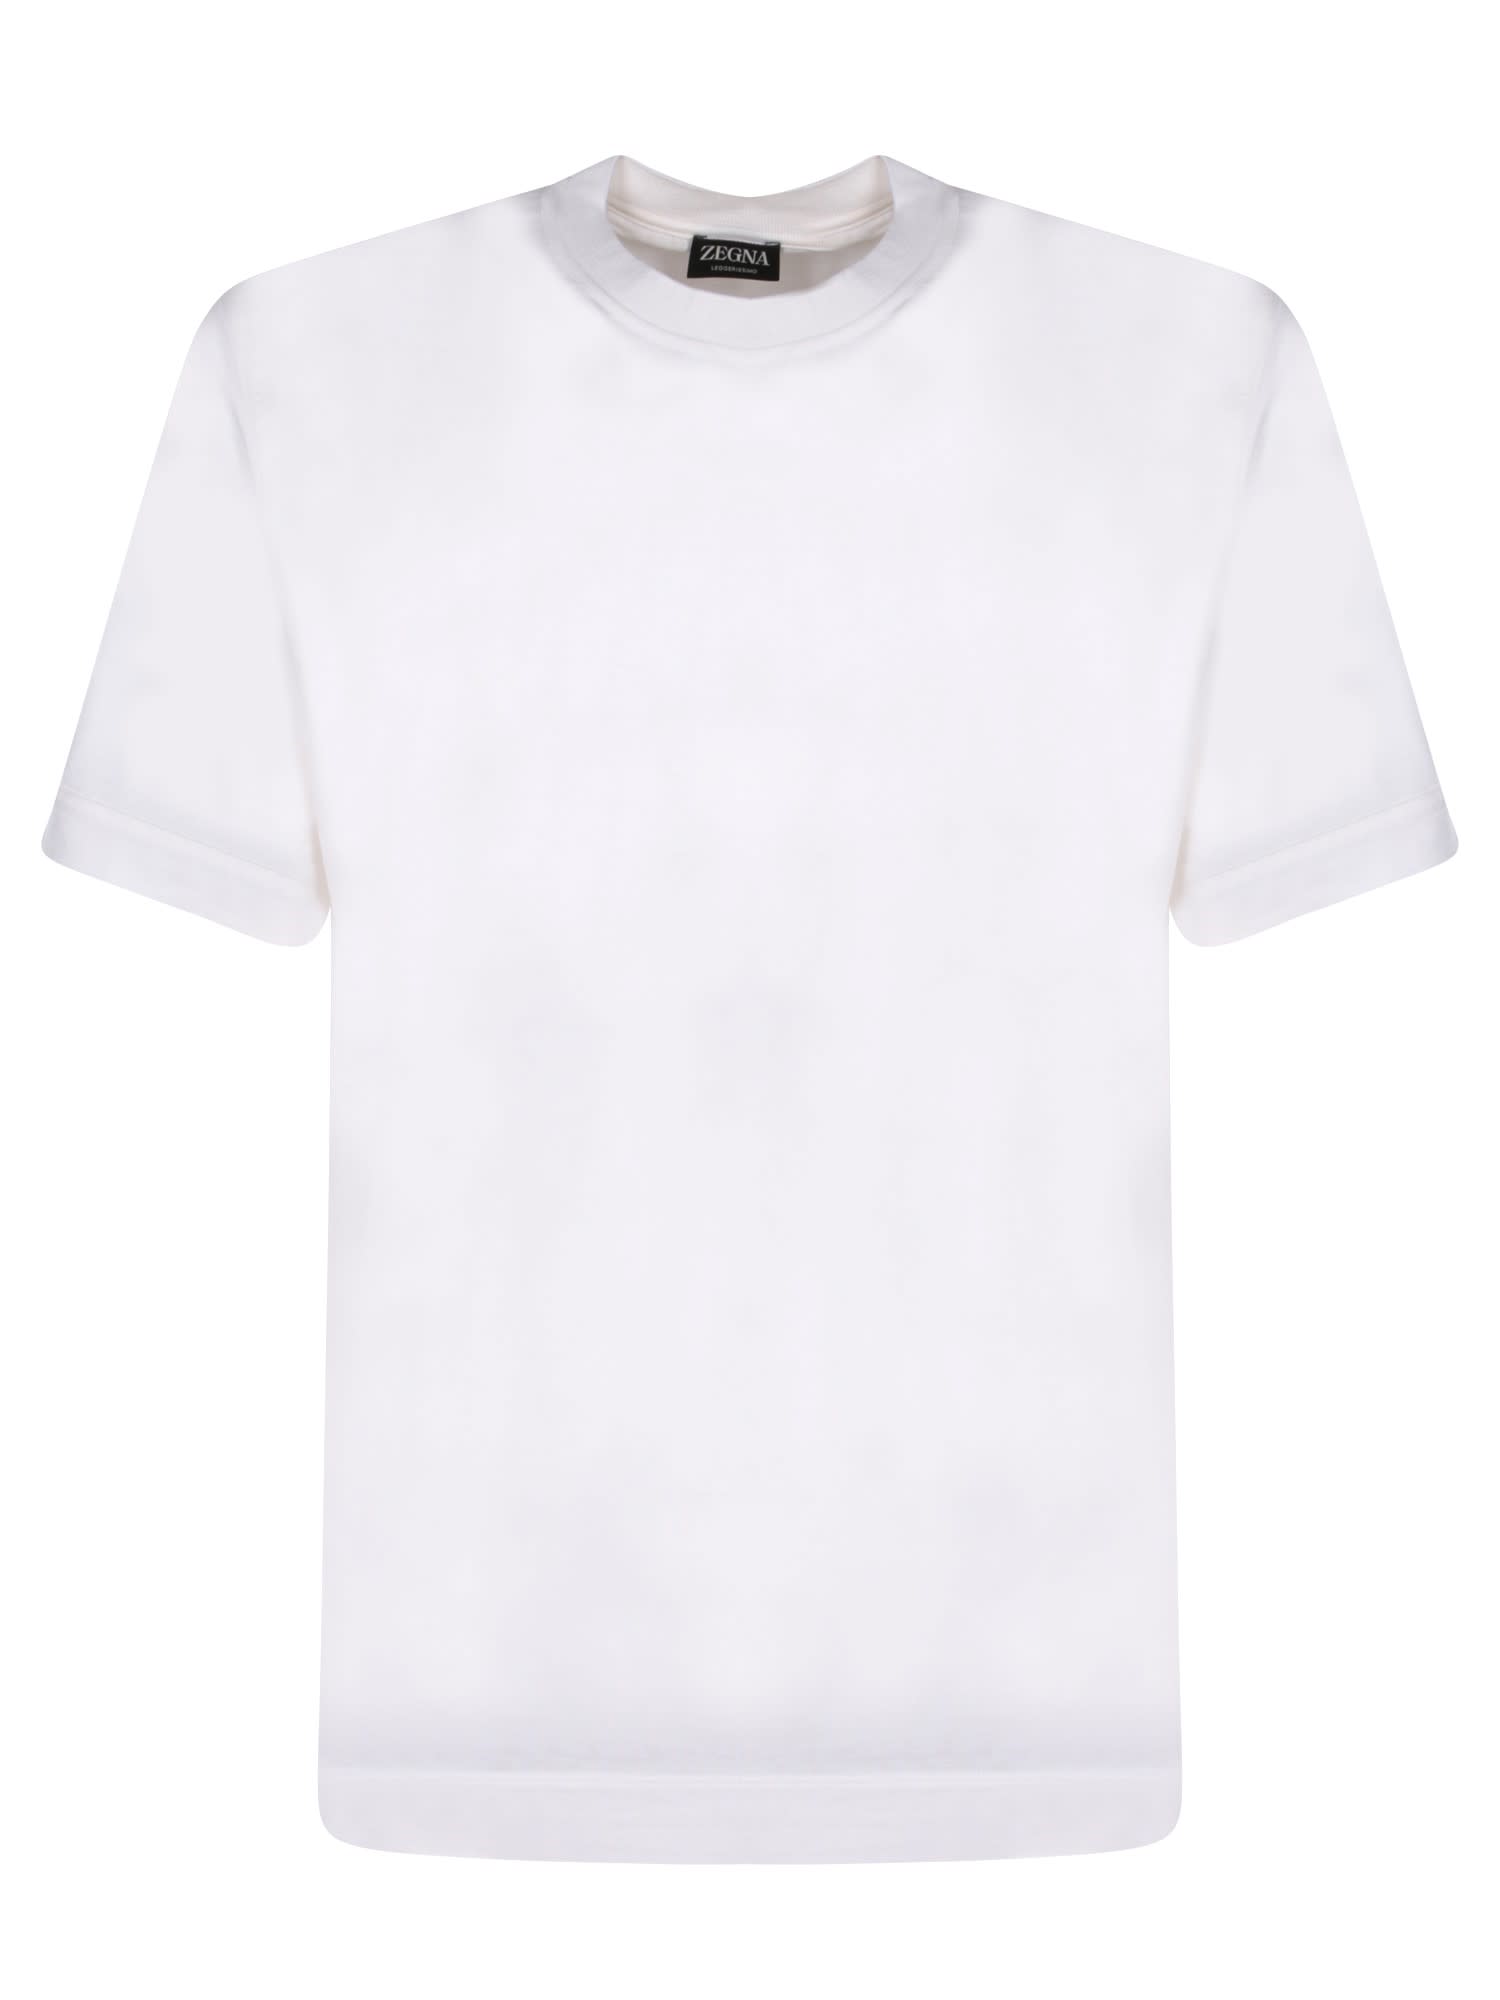 Zegna Ultra-light White T-shirt By